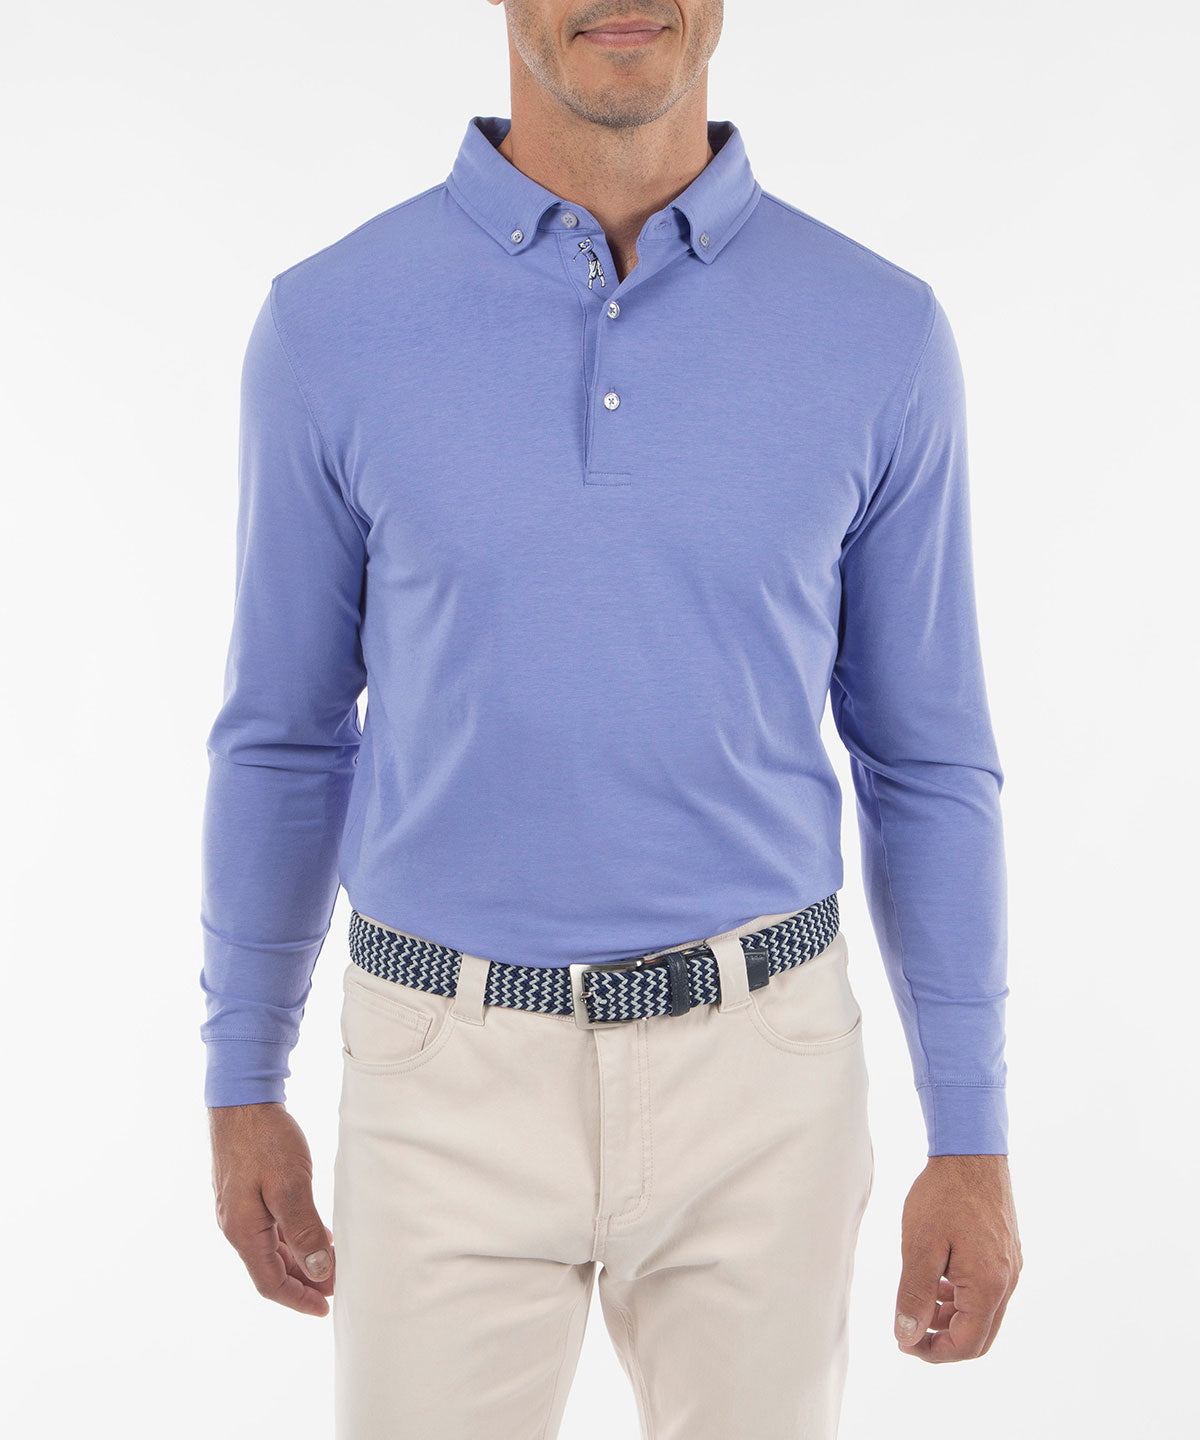 Men's Long Sleeve Polo Shirts 